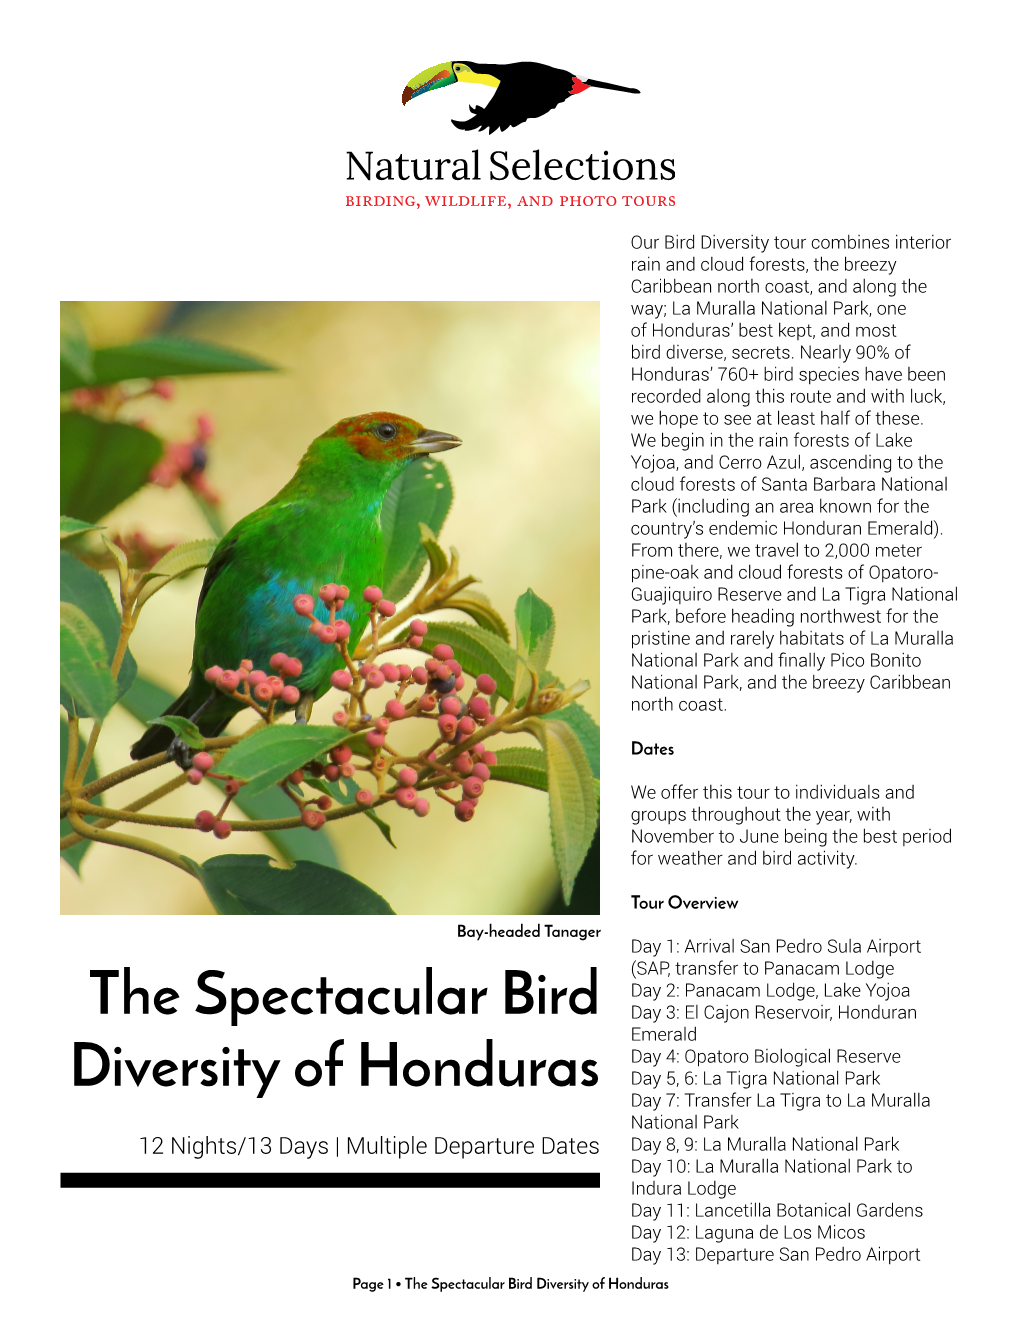 The Spectacular Bird Diversity of Honduras 12 Night/13 Day Itinerary